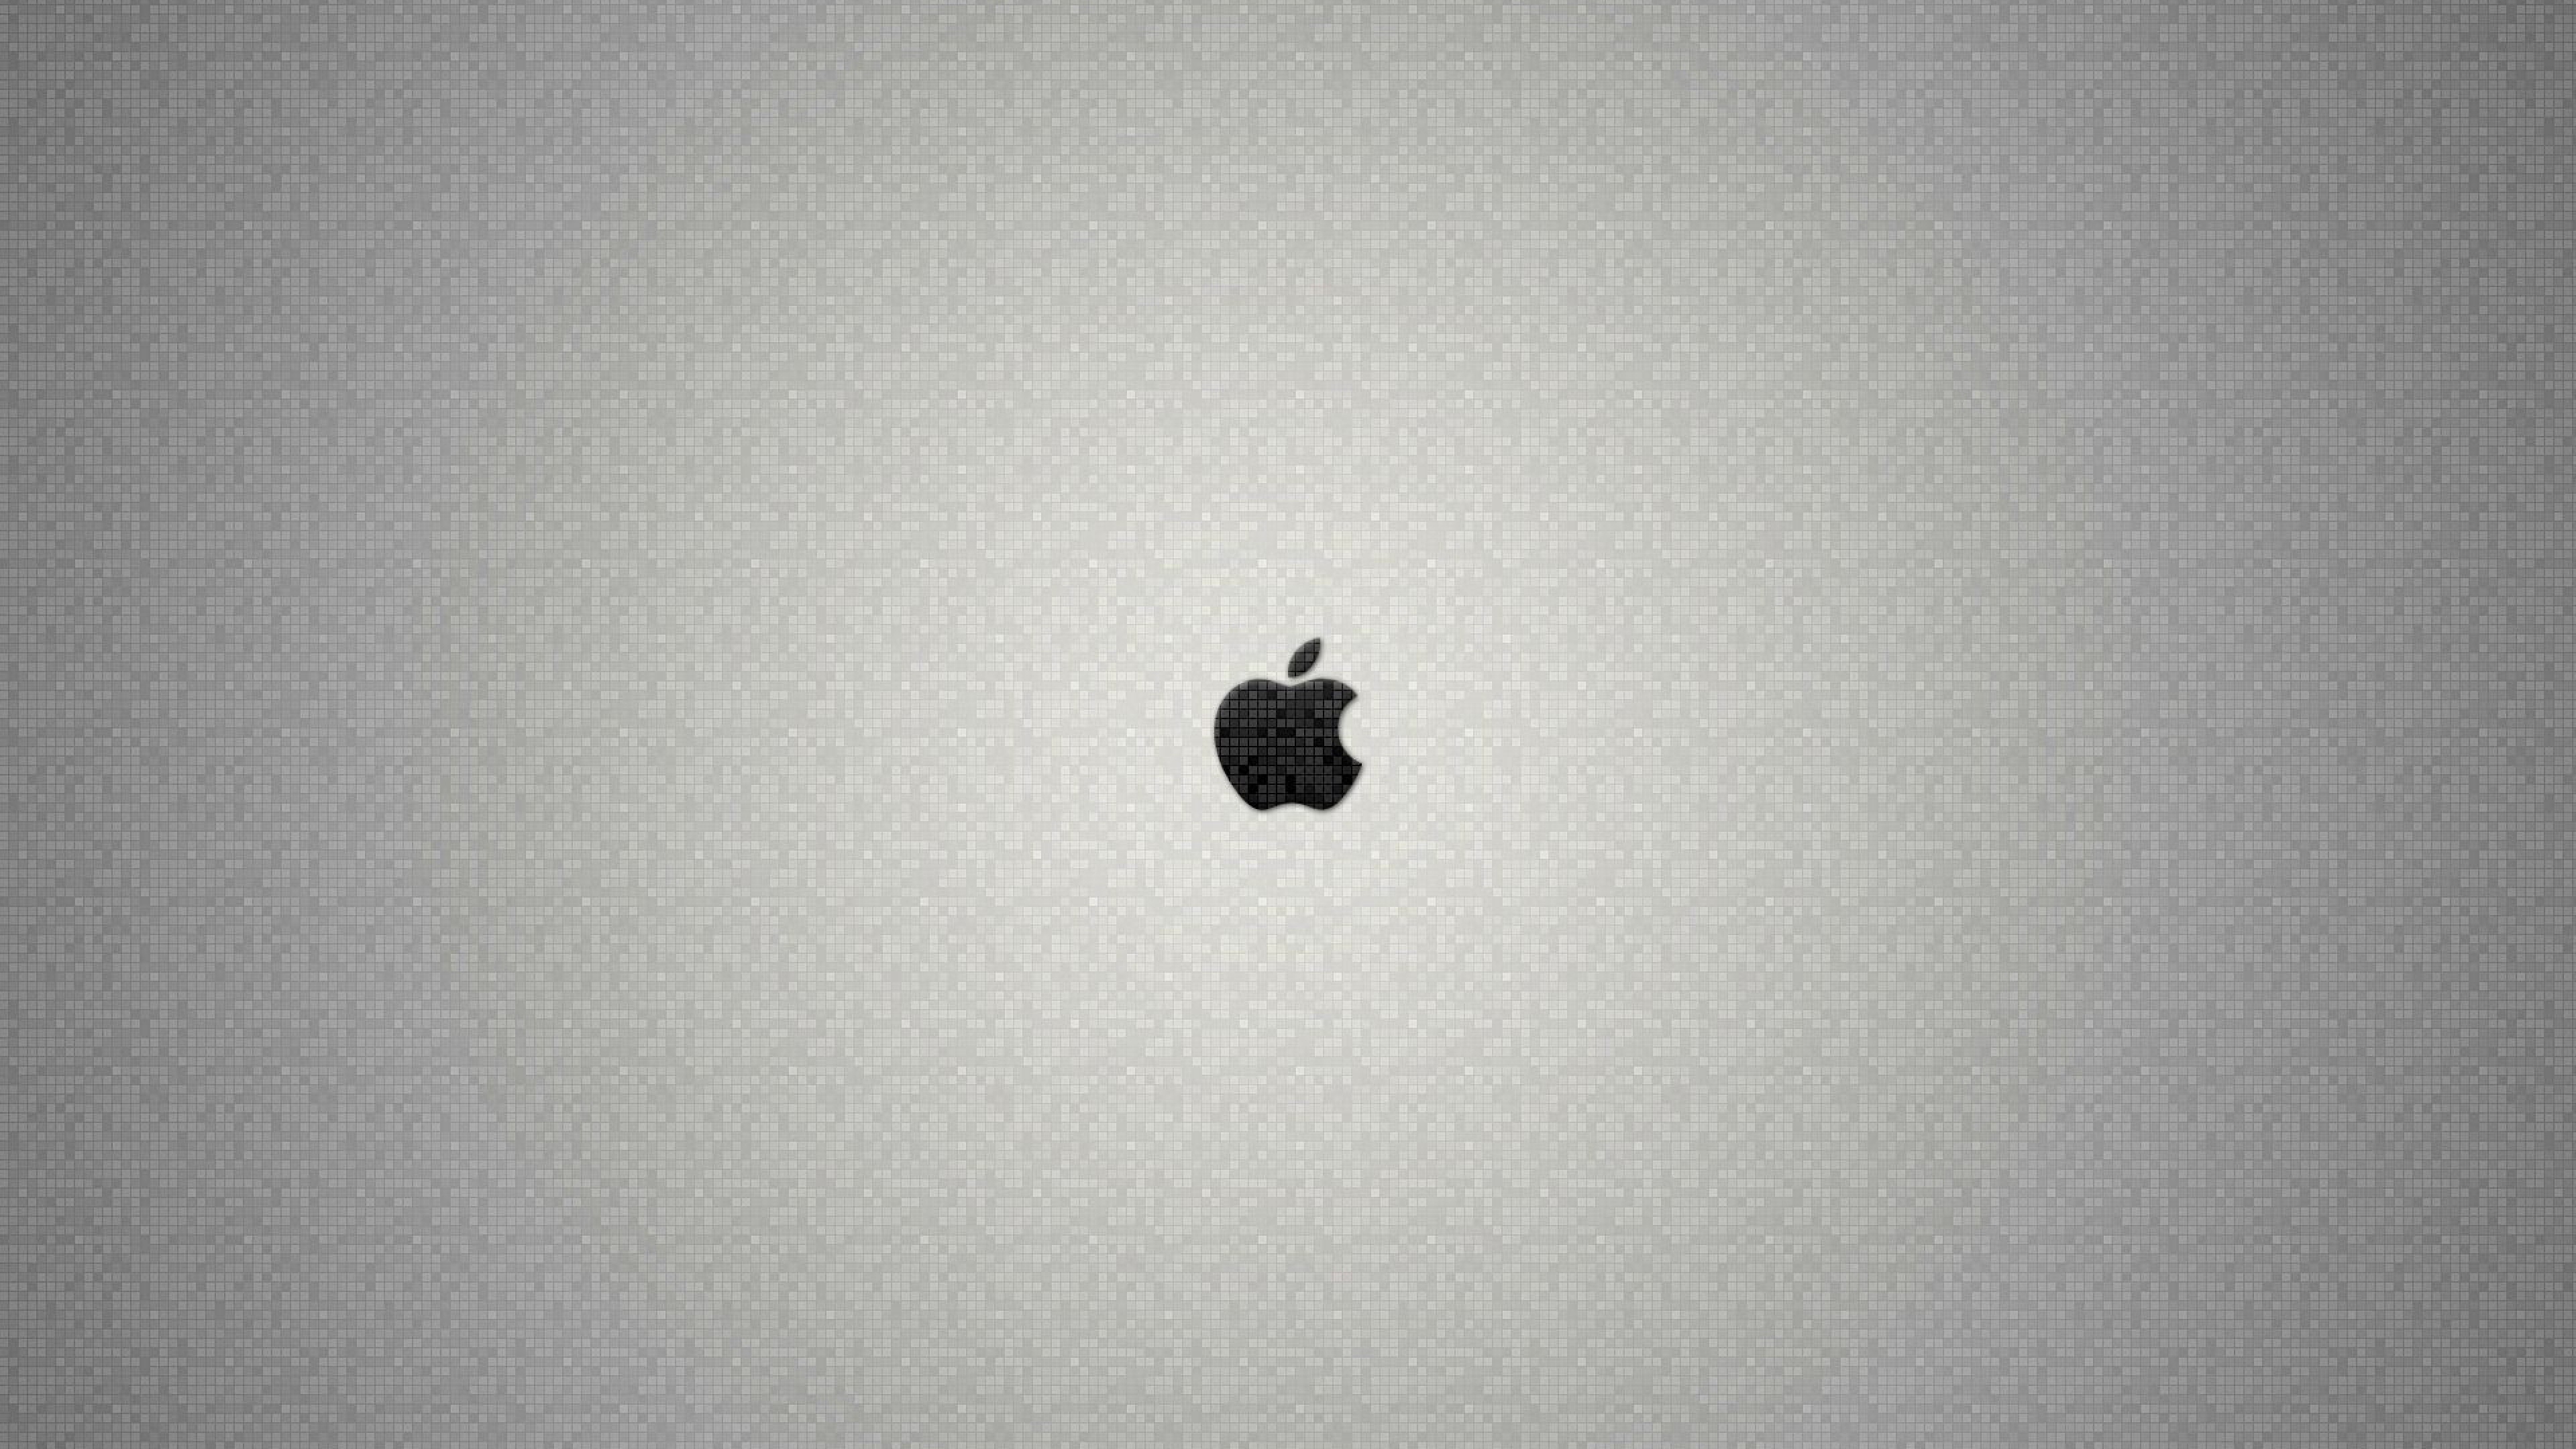 iMac Logo, Apple Mac background, Brand loyalty, Sleek and modern design, 3840x2160 4K Desktop